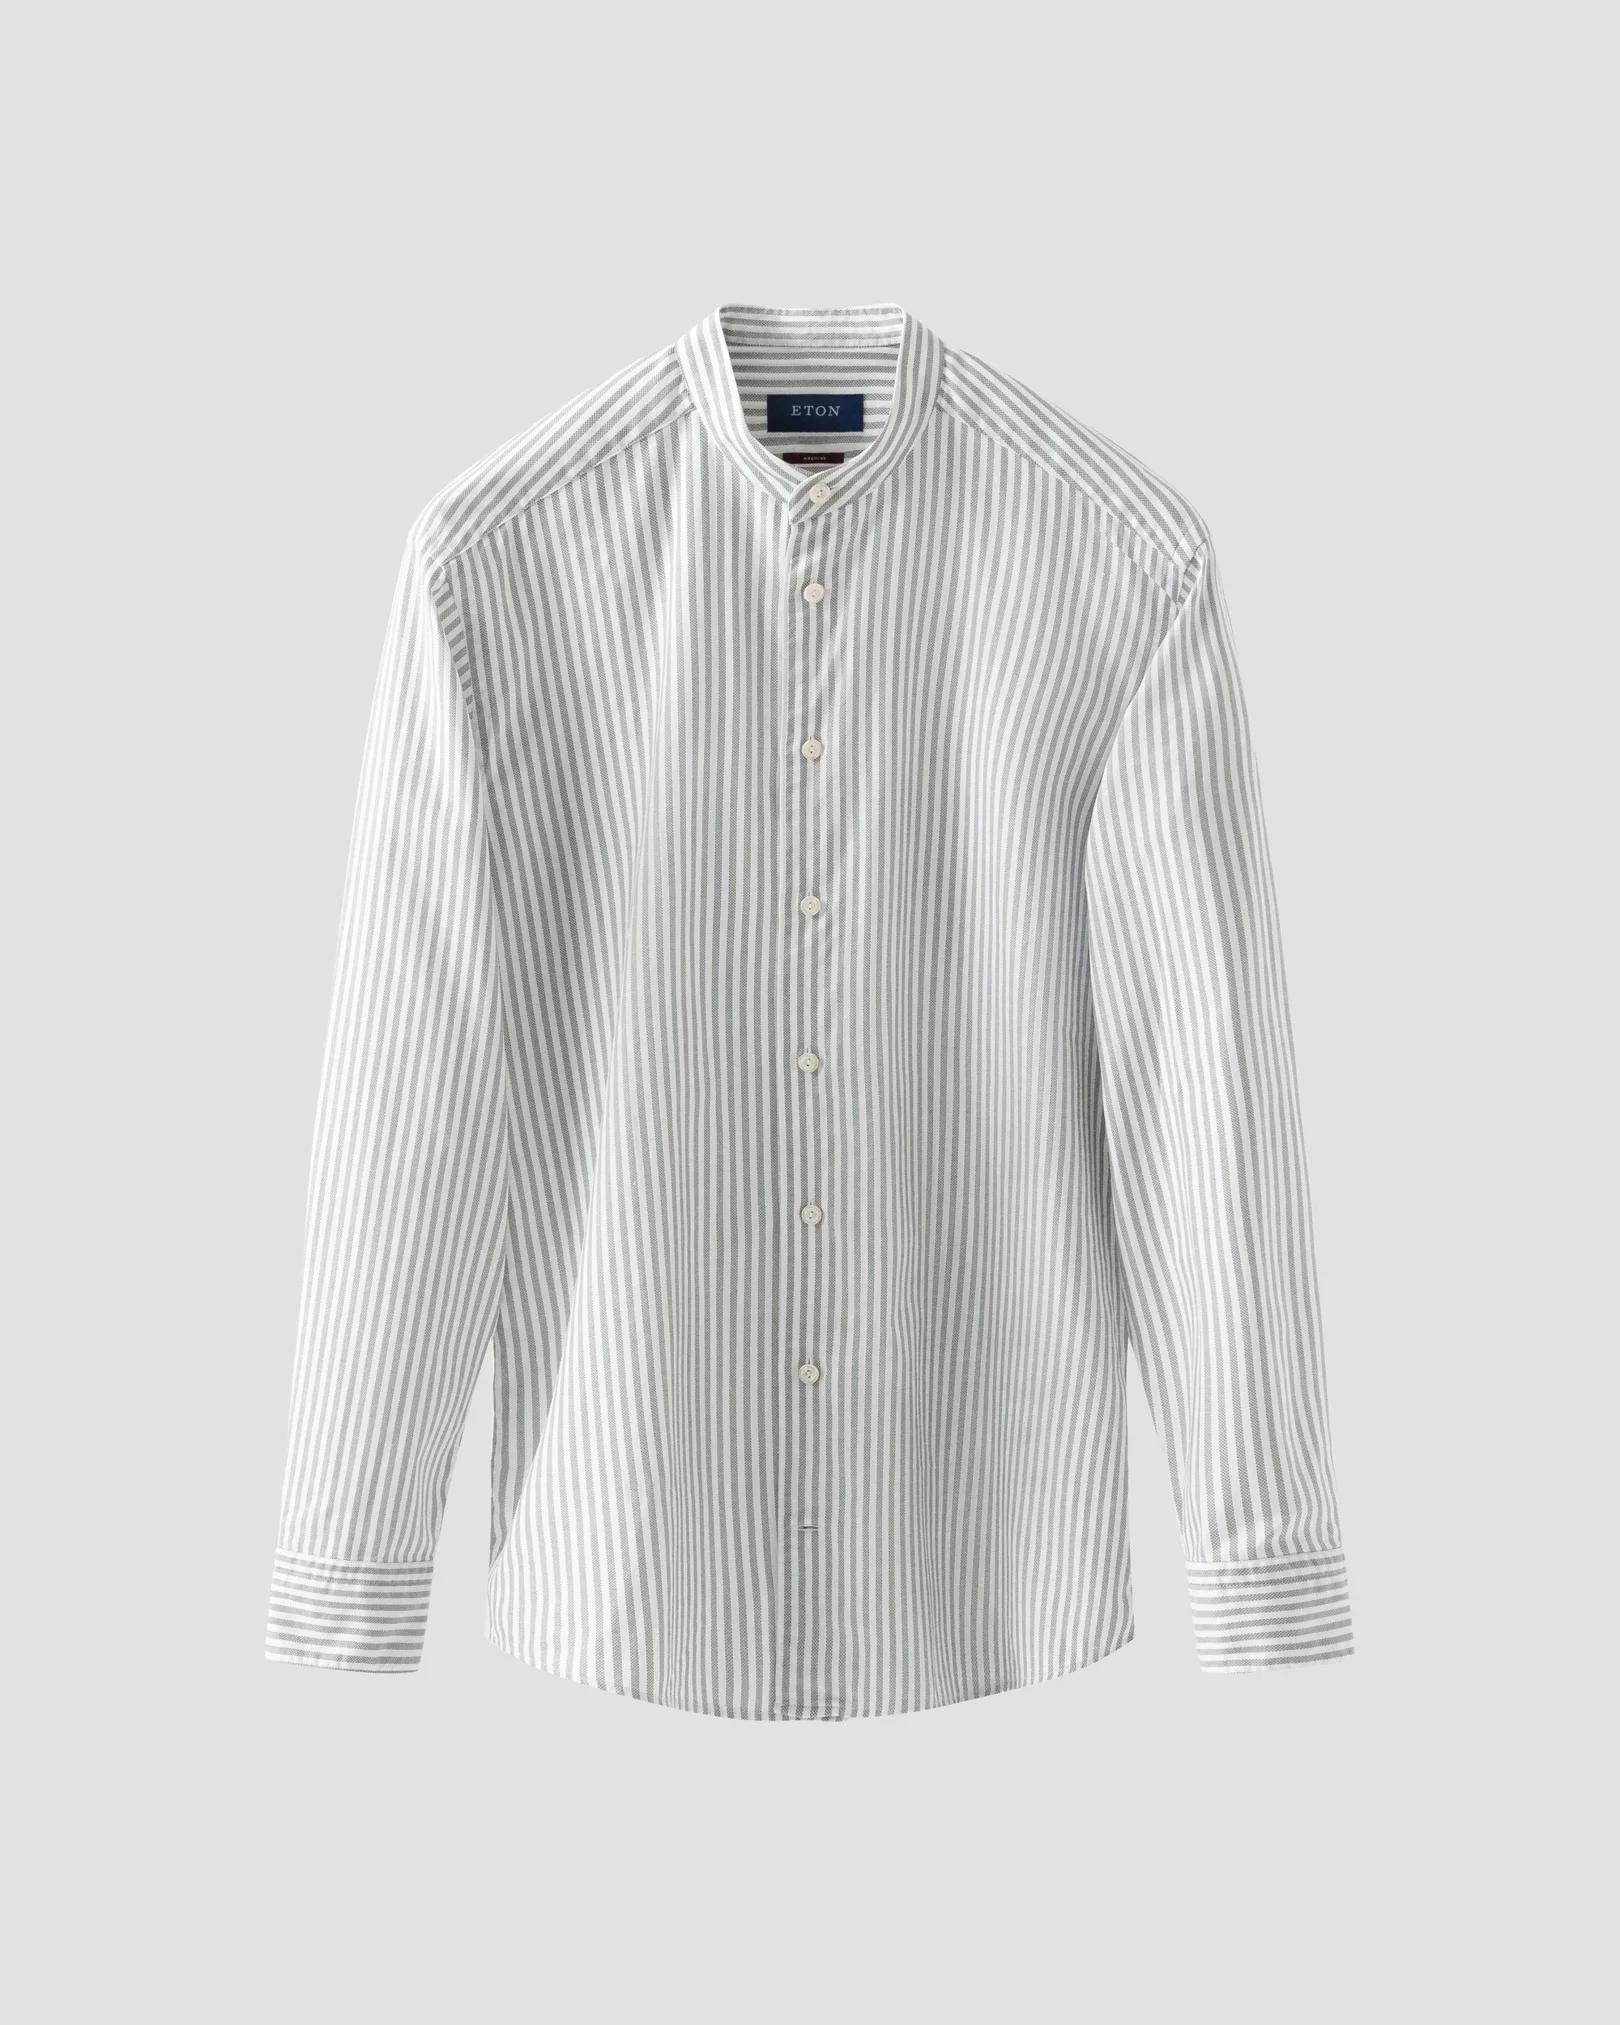 Oxford Shirts for Men - Quality OCBD shirts - Eton